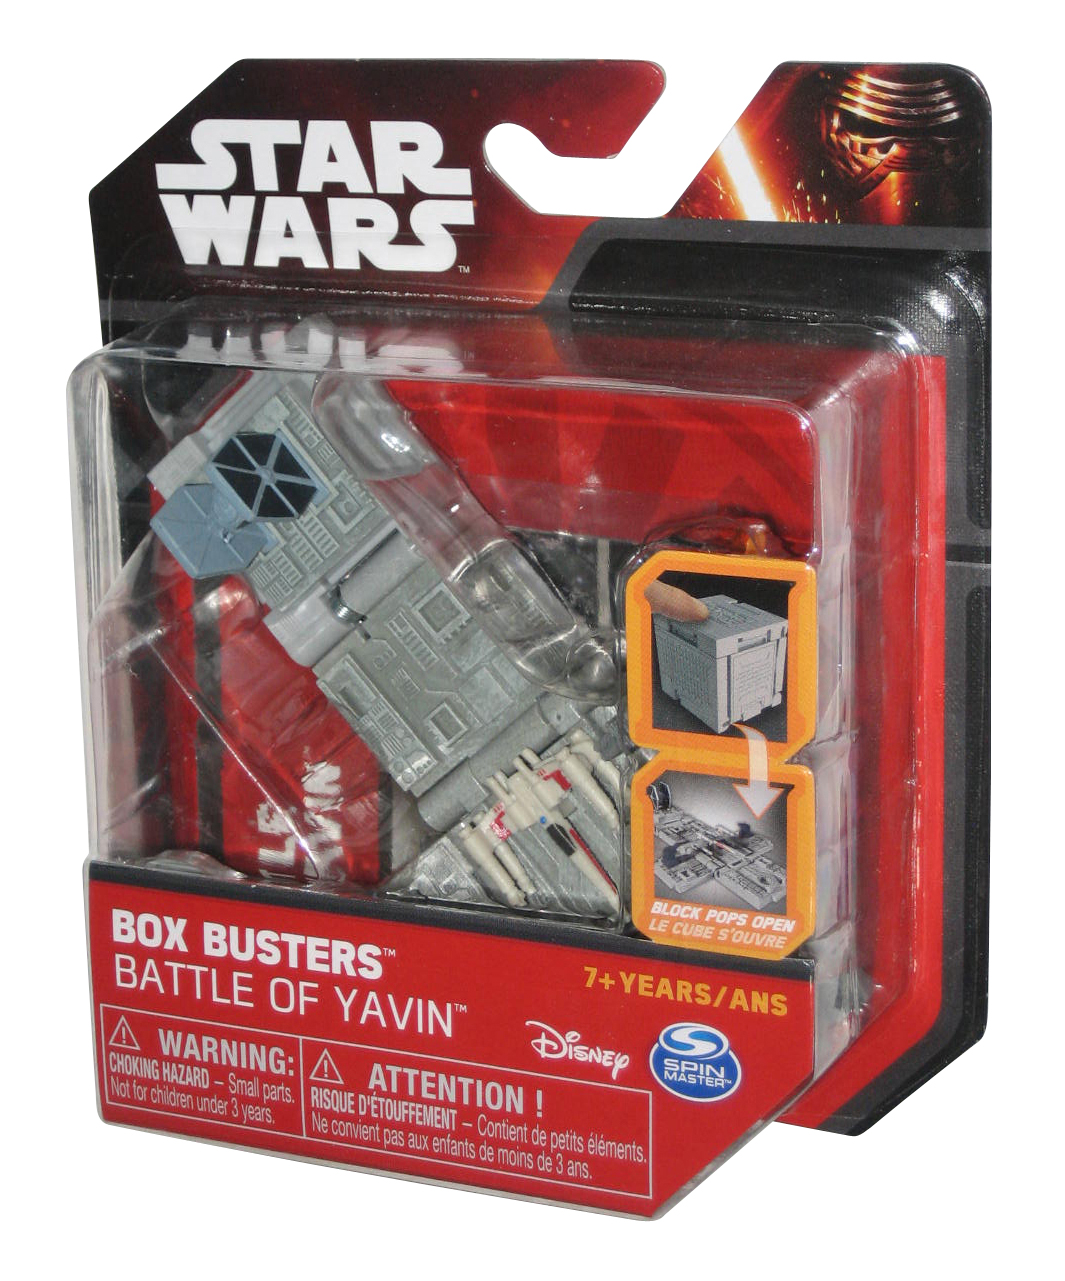 Star Wars Box Busters Battle Of Yavin Spin Master Toy Set Ebay